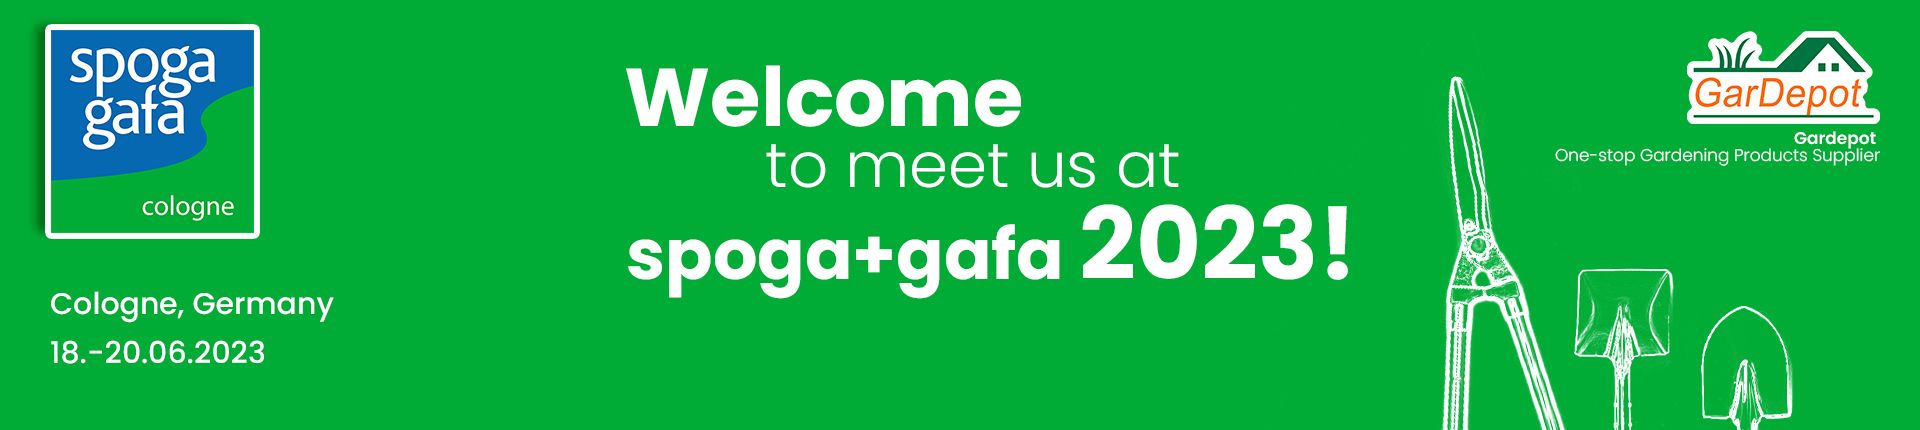 Welcome to meet us at spoga+gafa 2023!